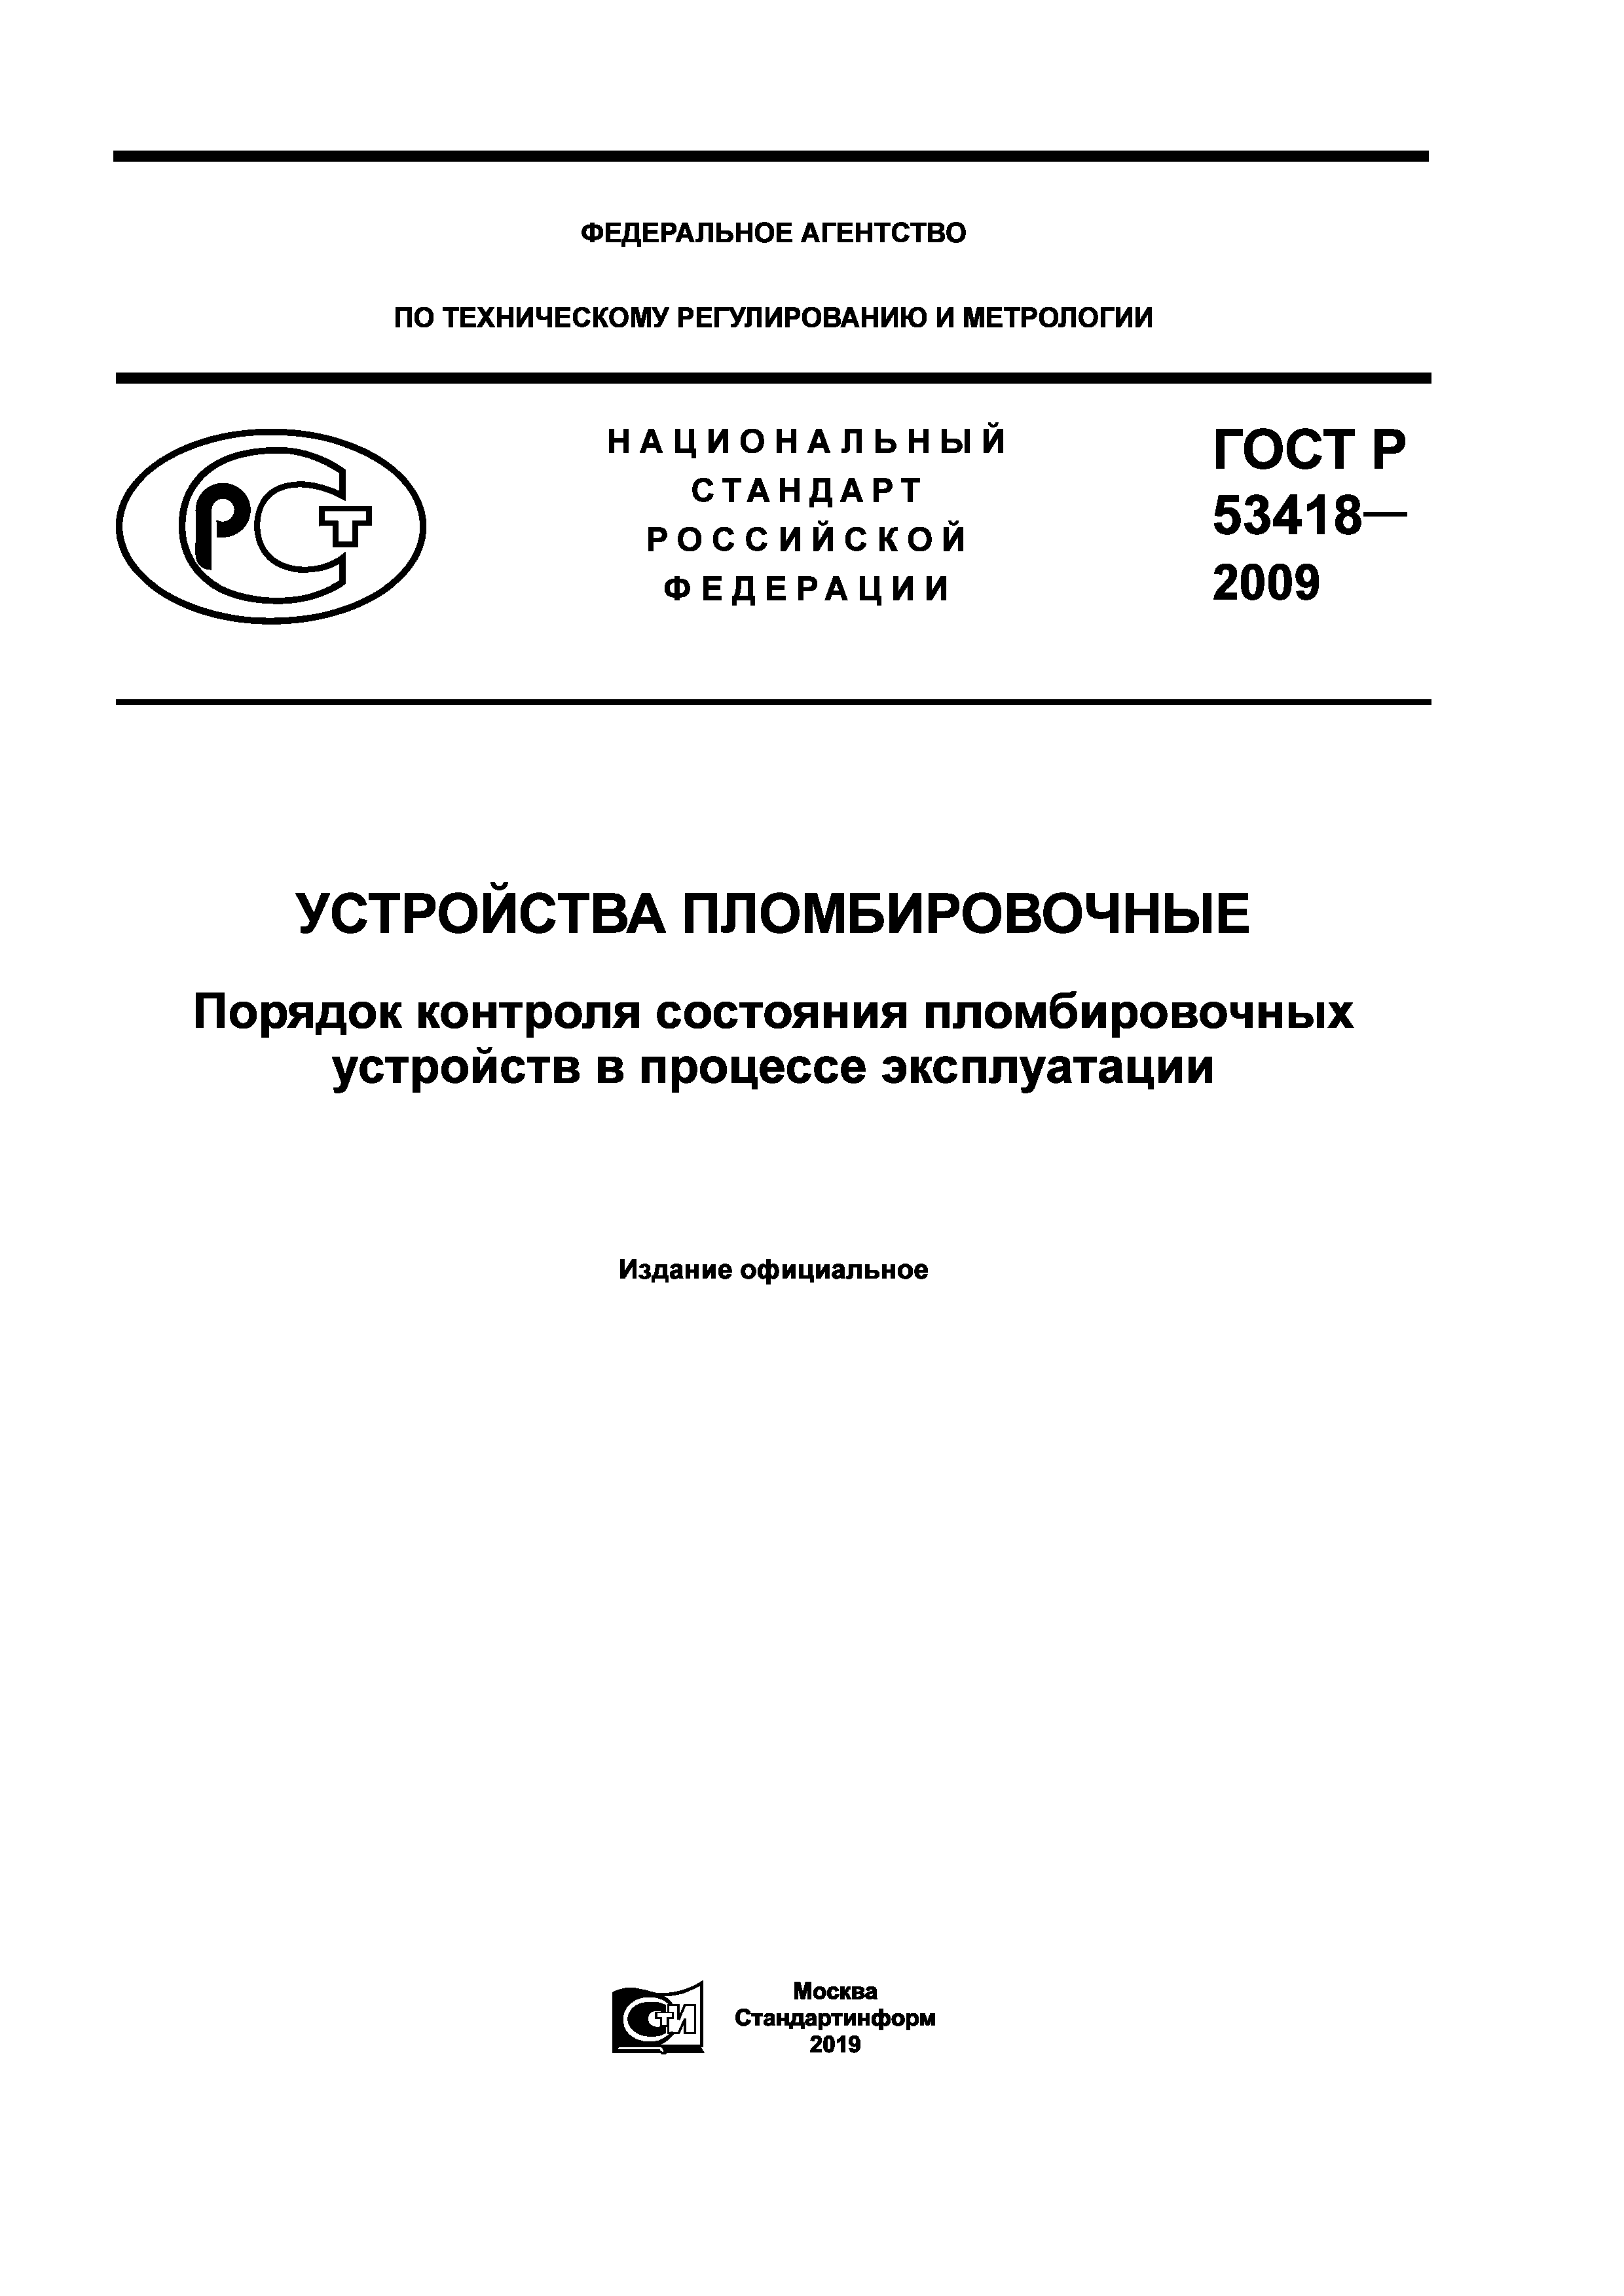 ГОСТ Р 53418-2009